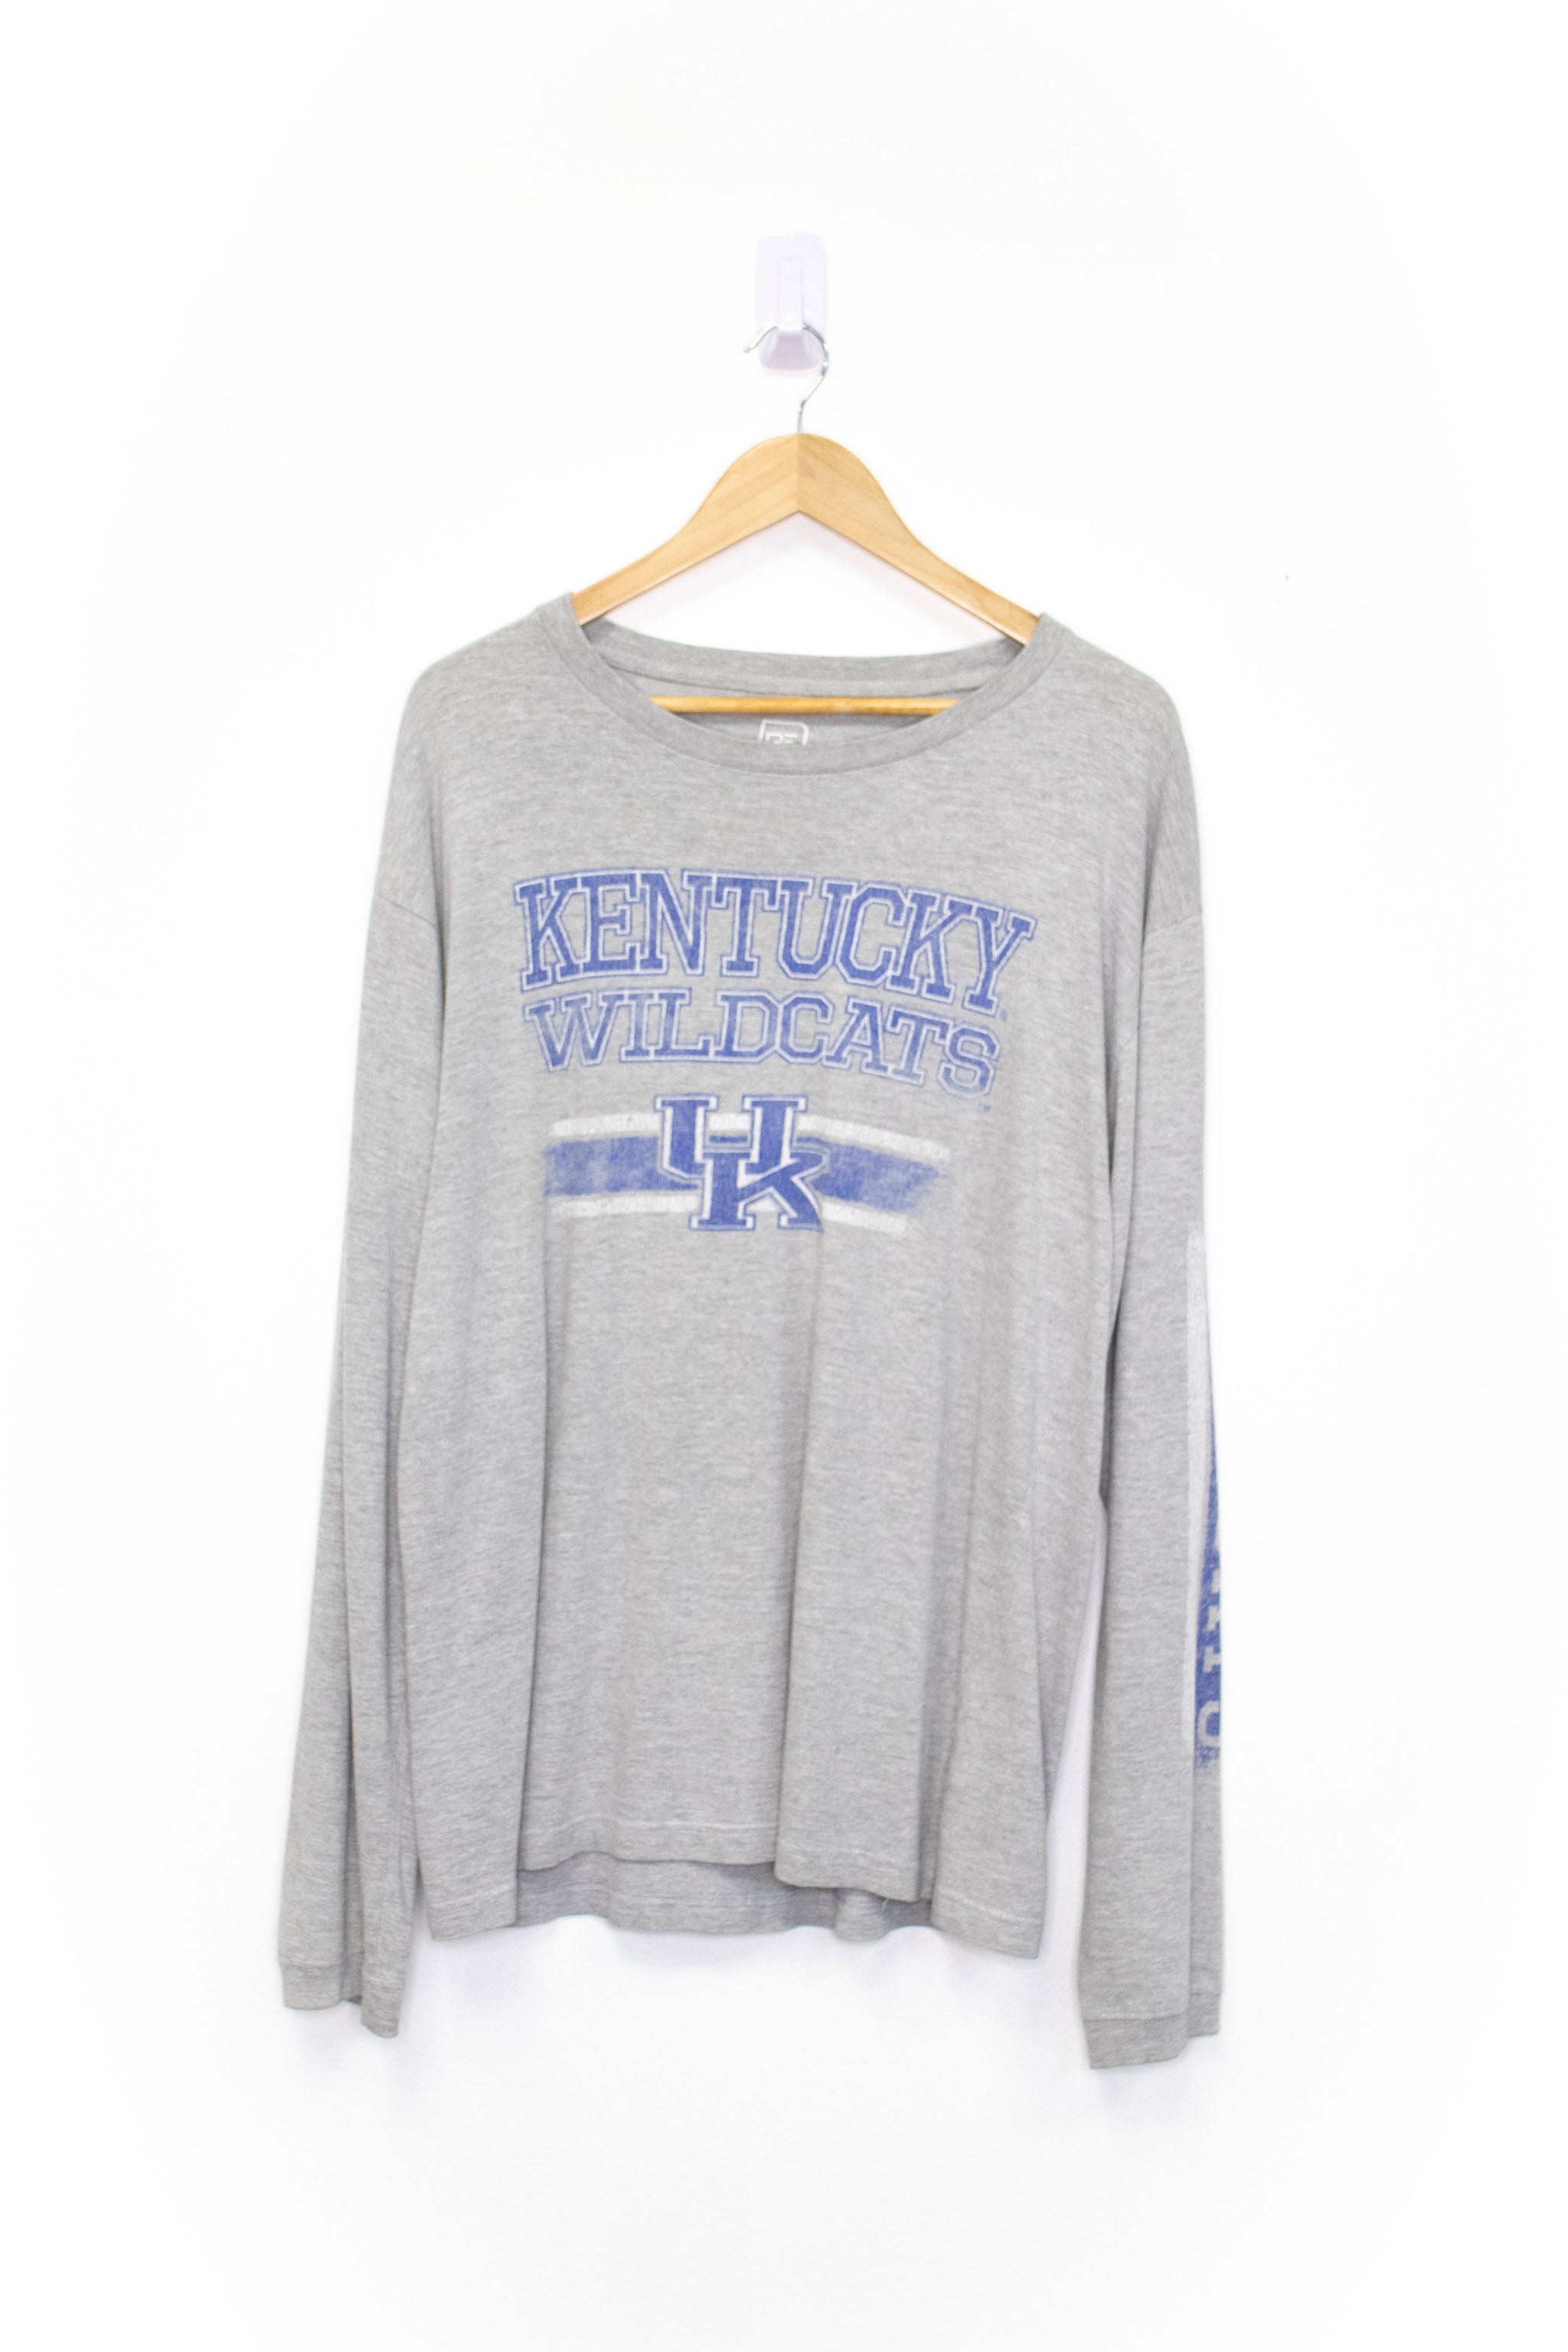 Vintage Kentucky Wildcats Longsleeve